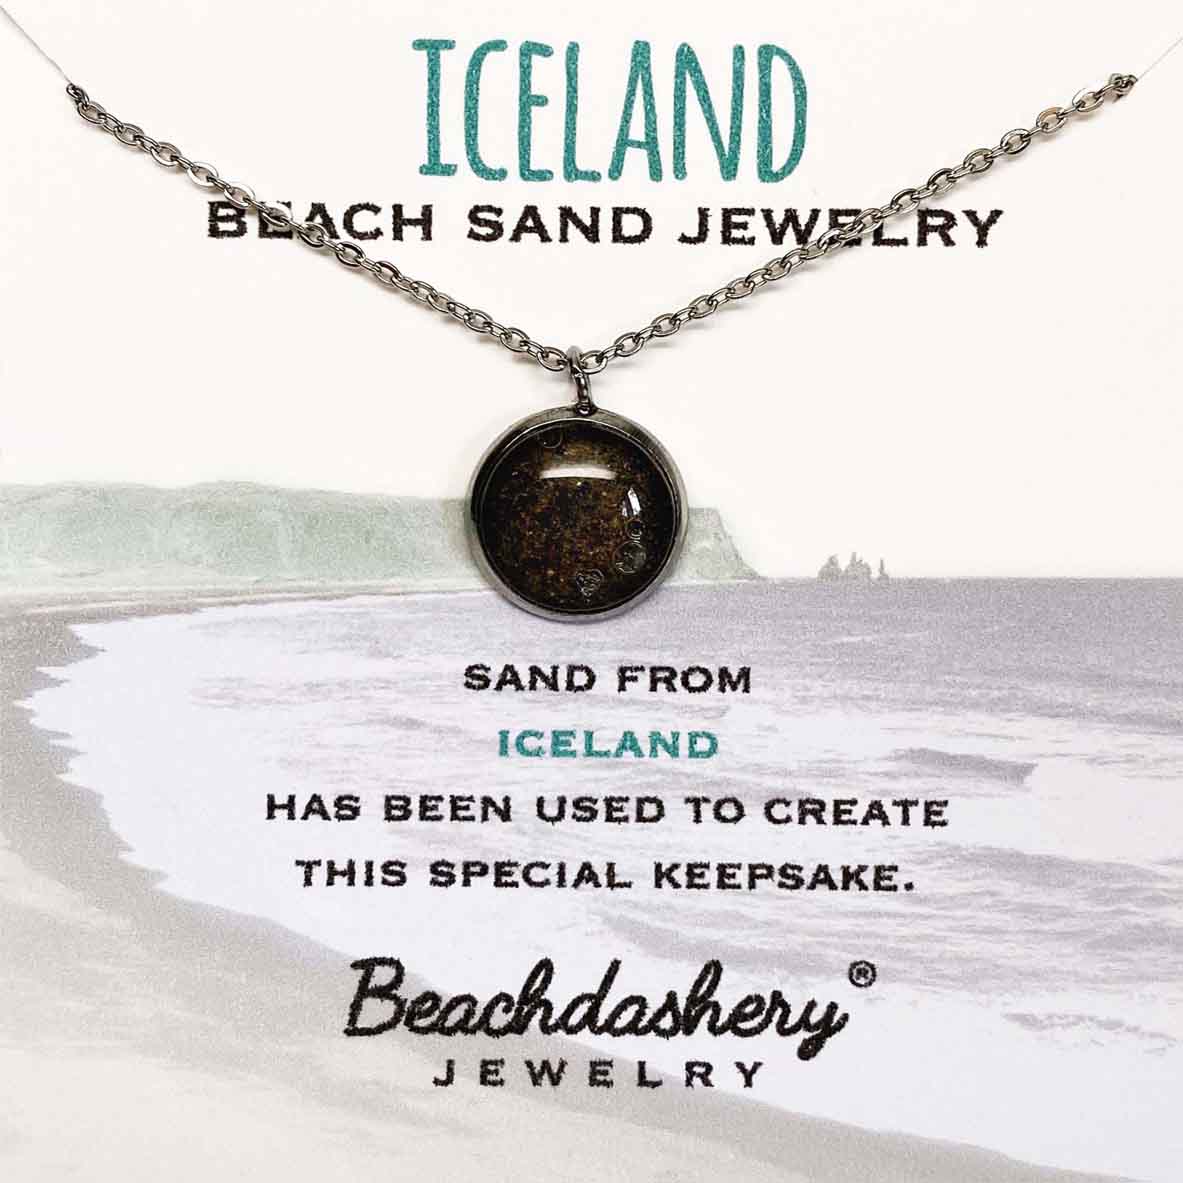 Iceland Beach Sand Jewelry Beachdashery® Jewelry